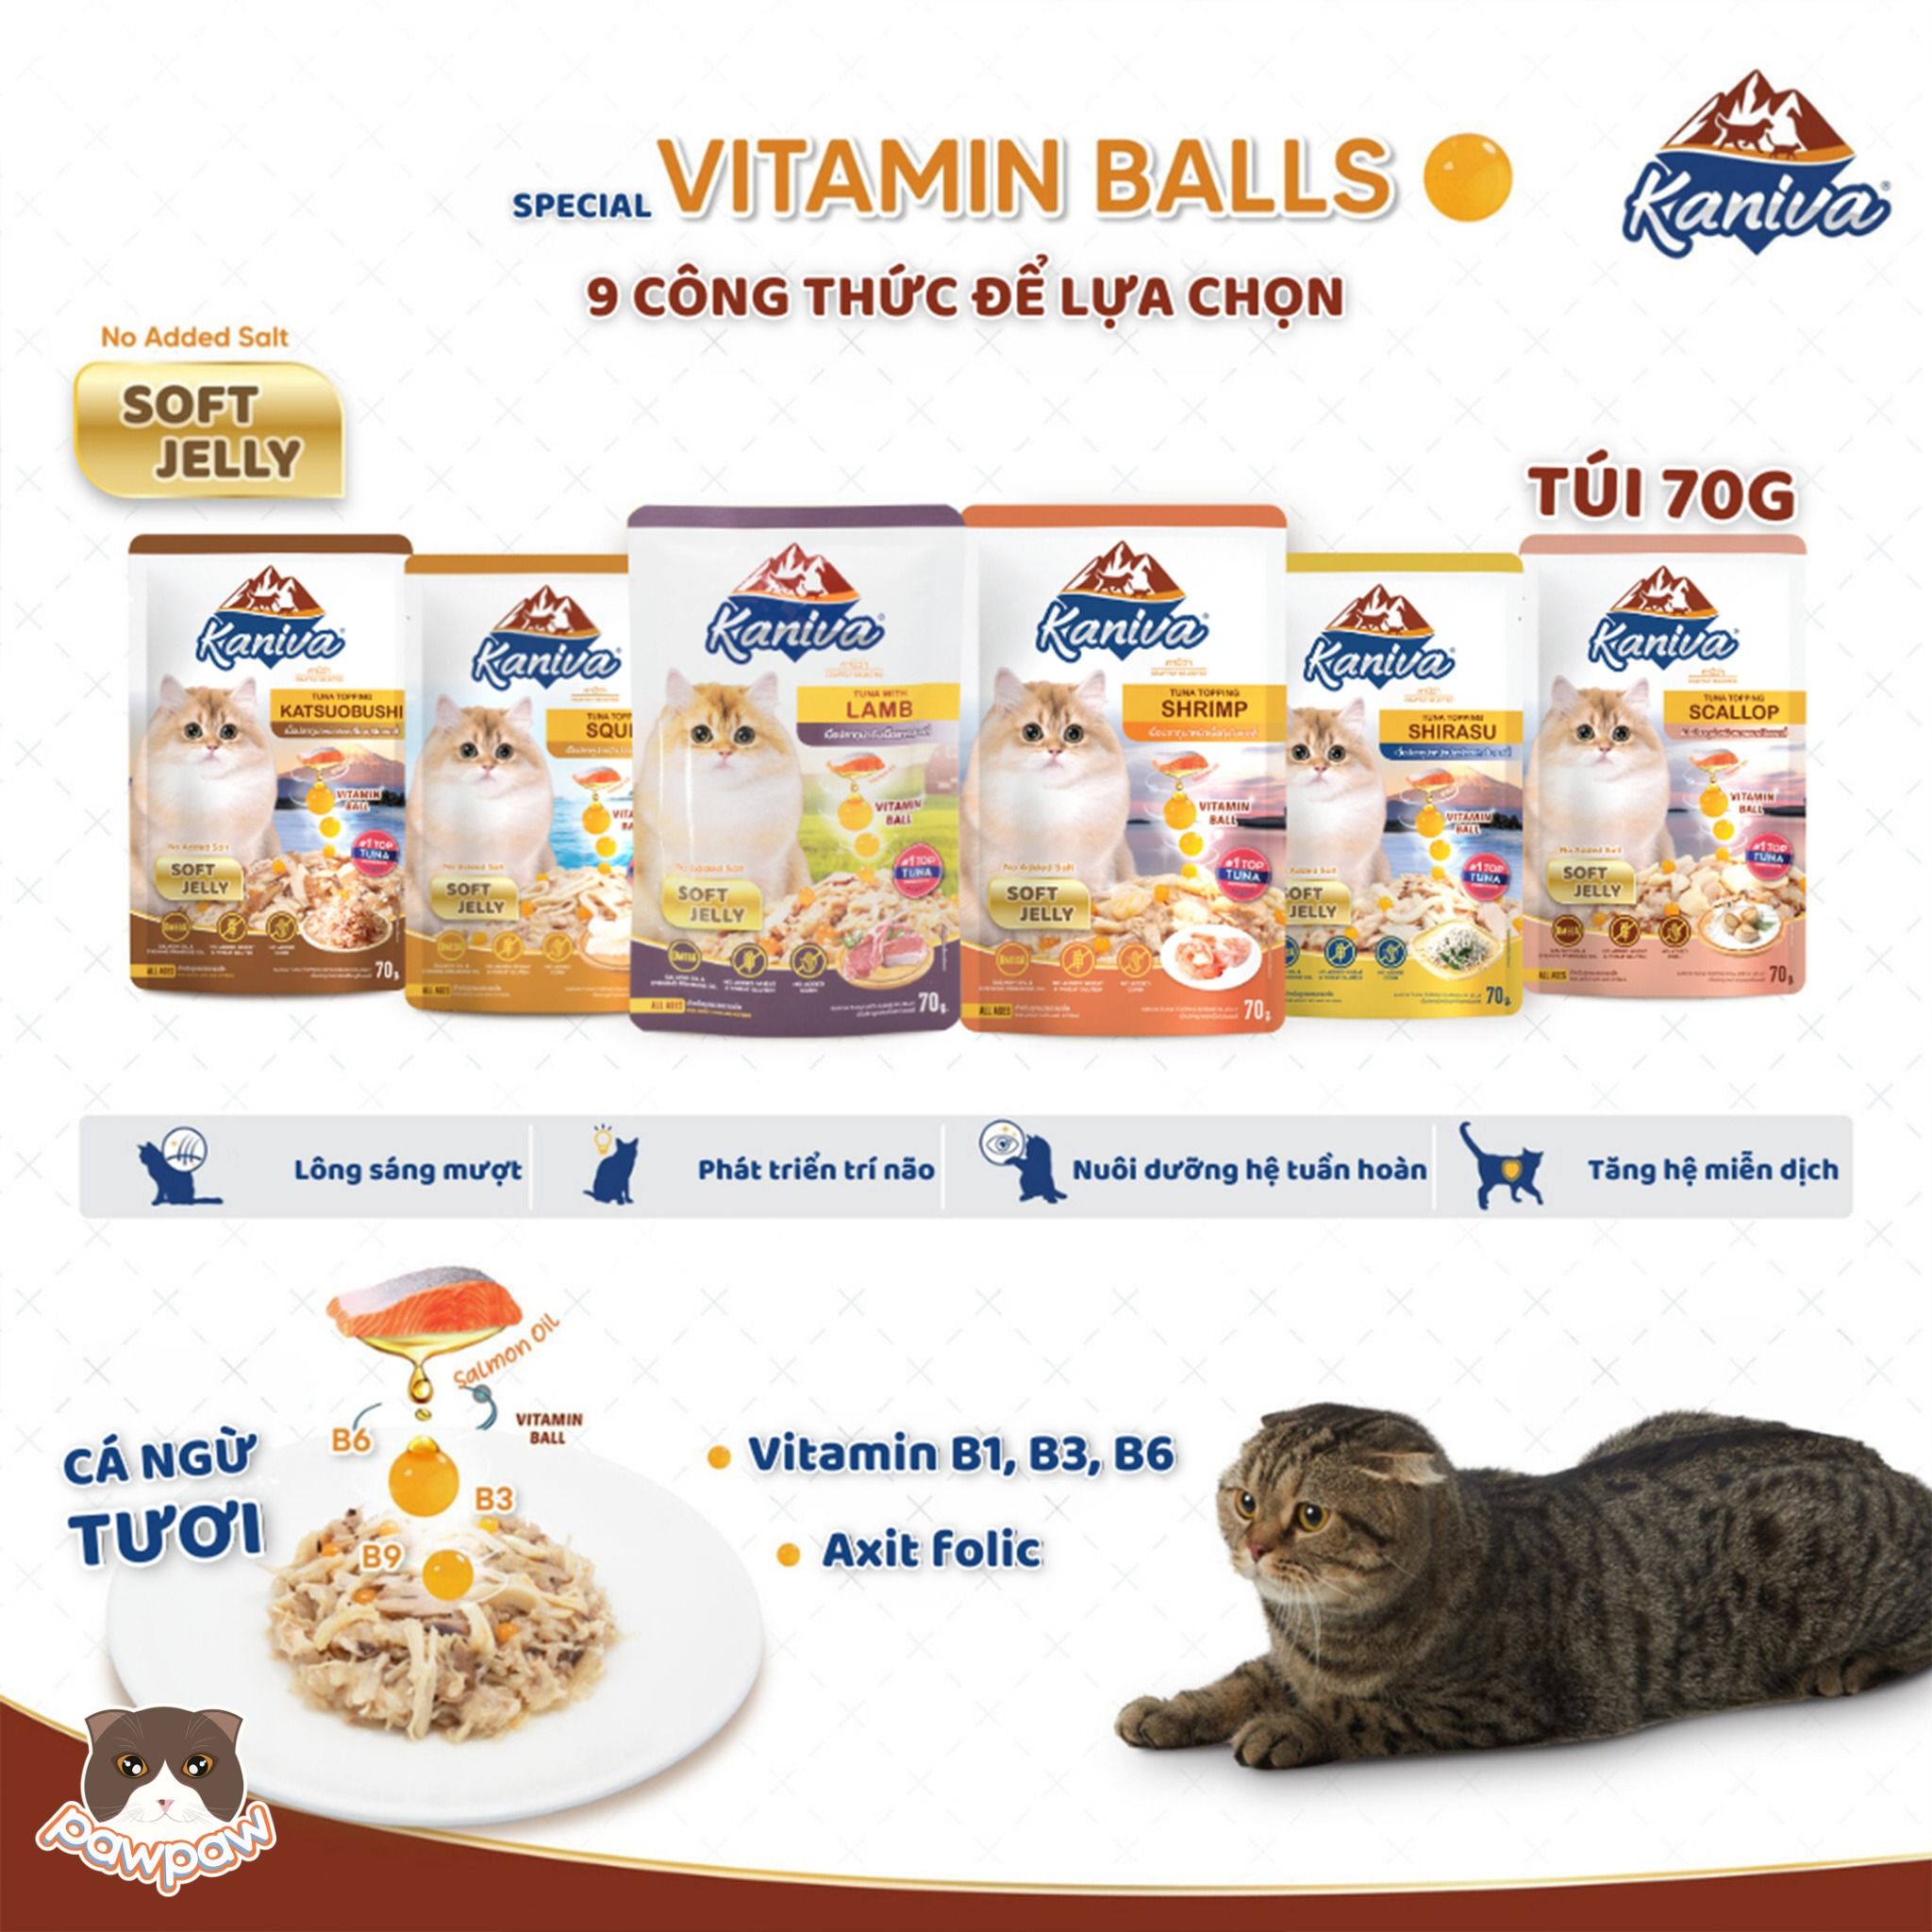  Pate Kaniva Vitamin Ball 70g cho mèo 